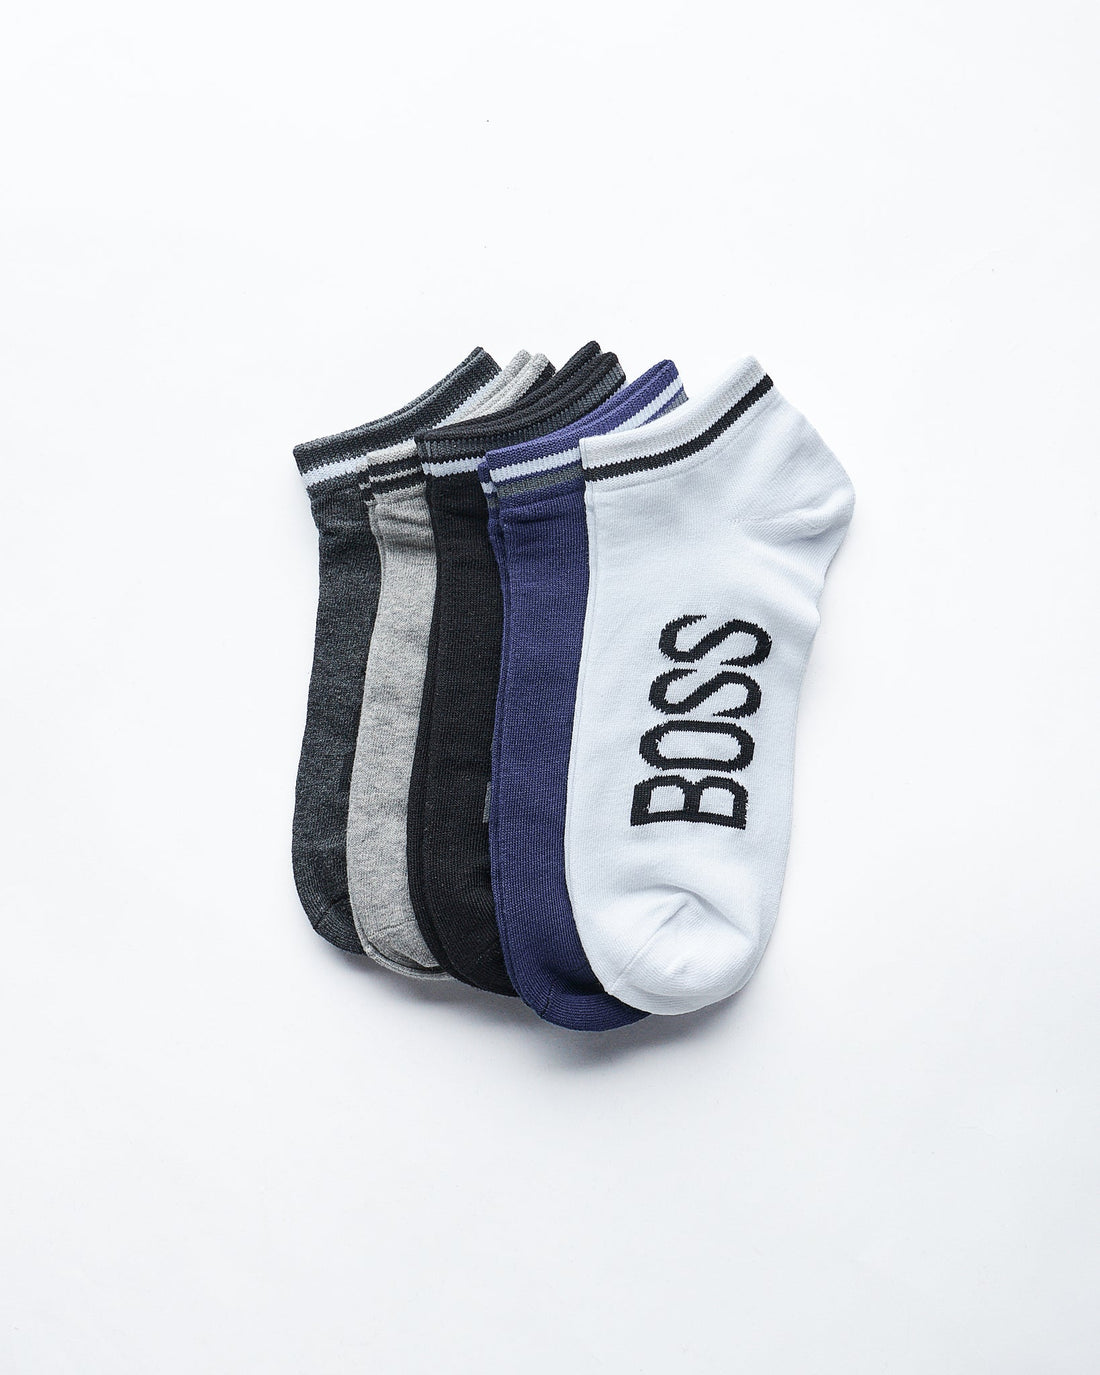 23/Louis Vuitton counter latest fashion socks（5 pairs one box